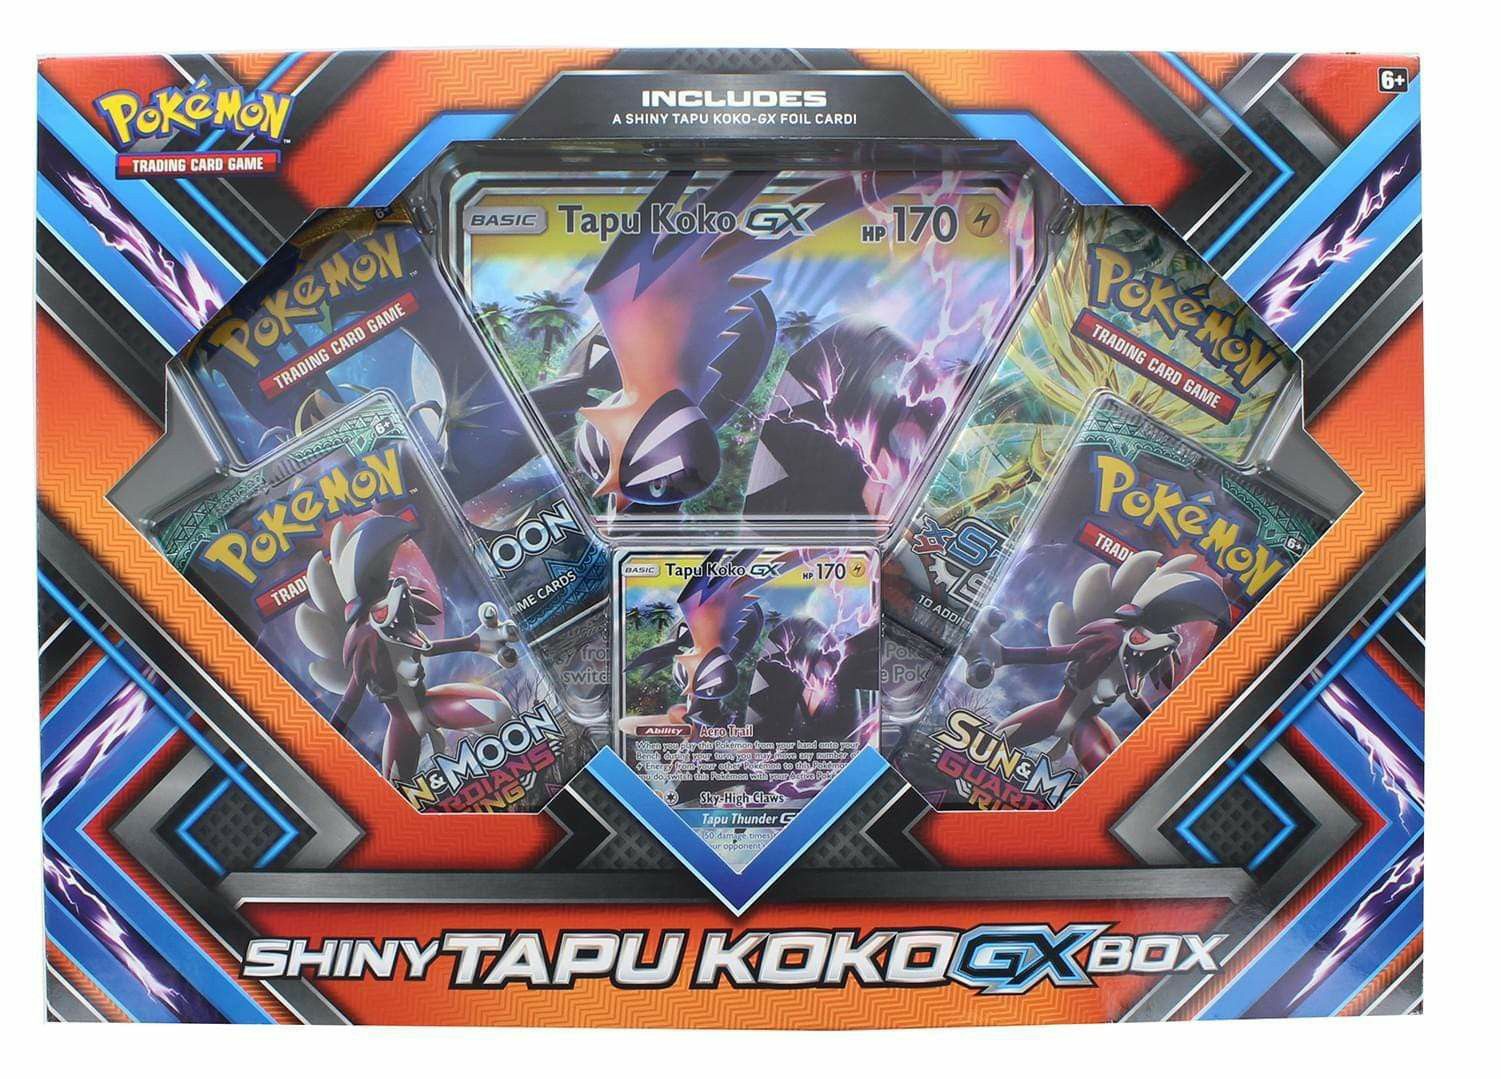 Shiny Tapu Koko Gx Box